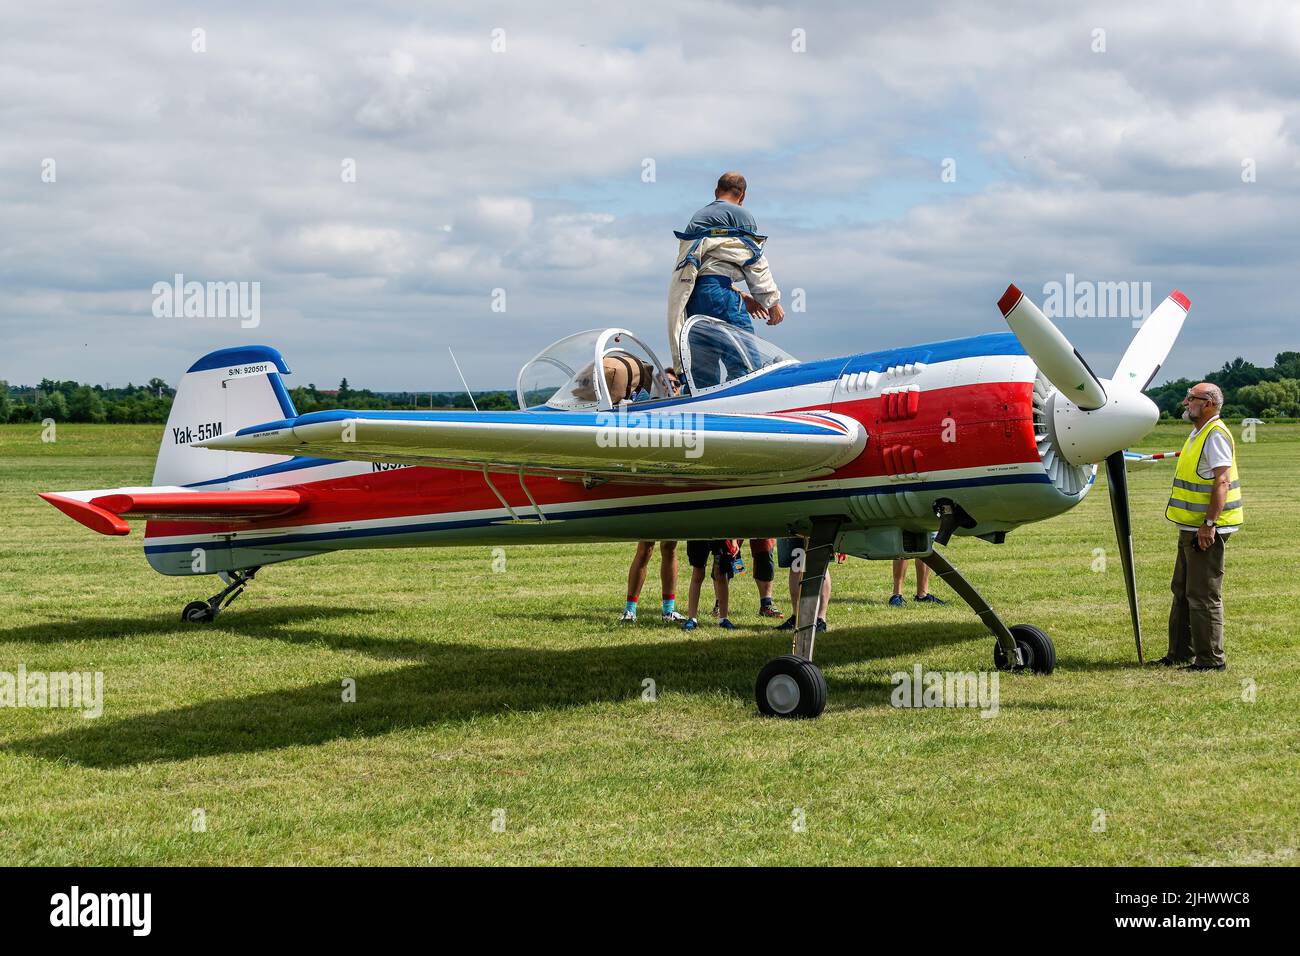 Aviation Day. Sports aerobatic aircraft Yak 55 ready at the airport Stock Photo